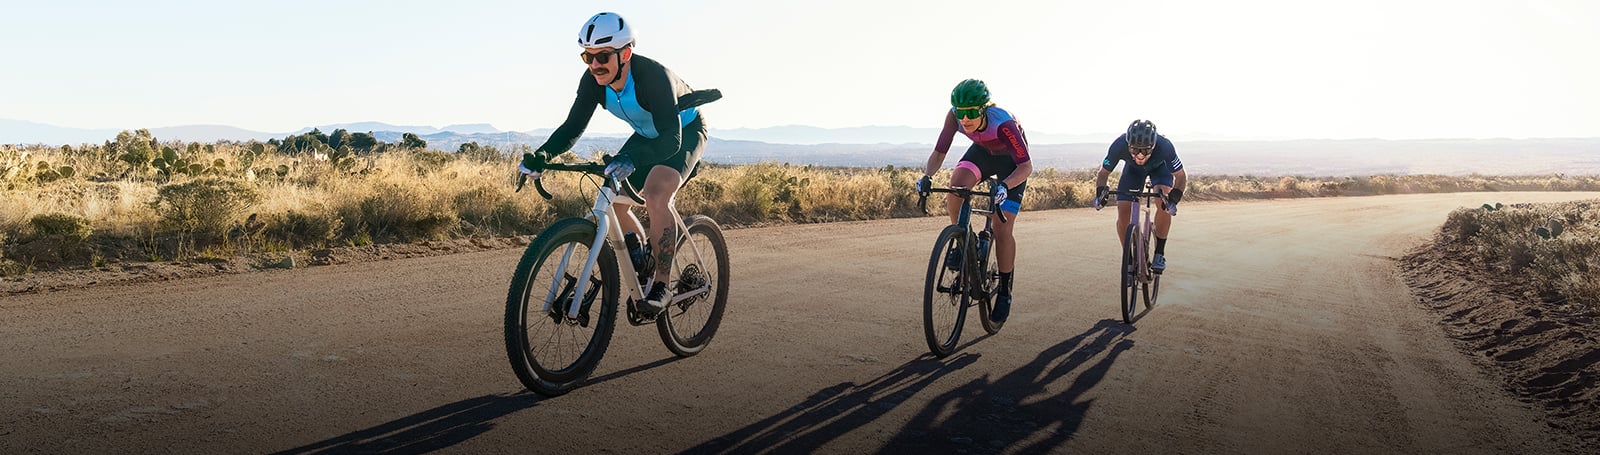 Bicicletas mountain bike · Deportes · El Corte Inglés (65)